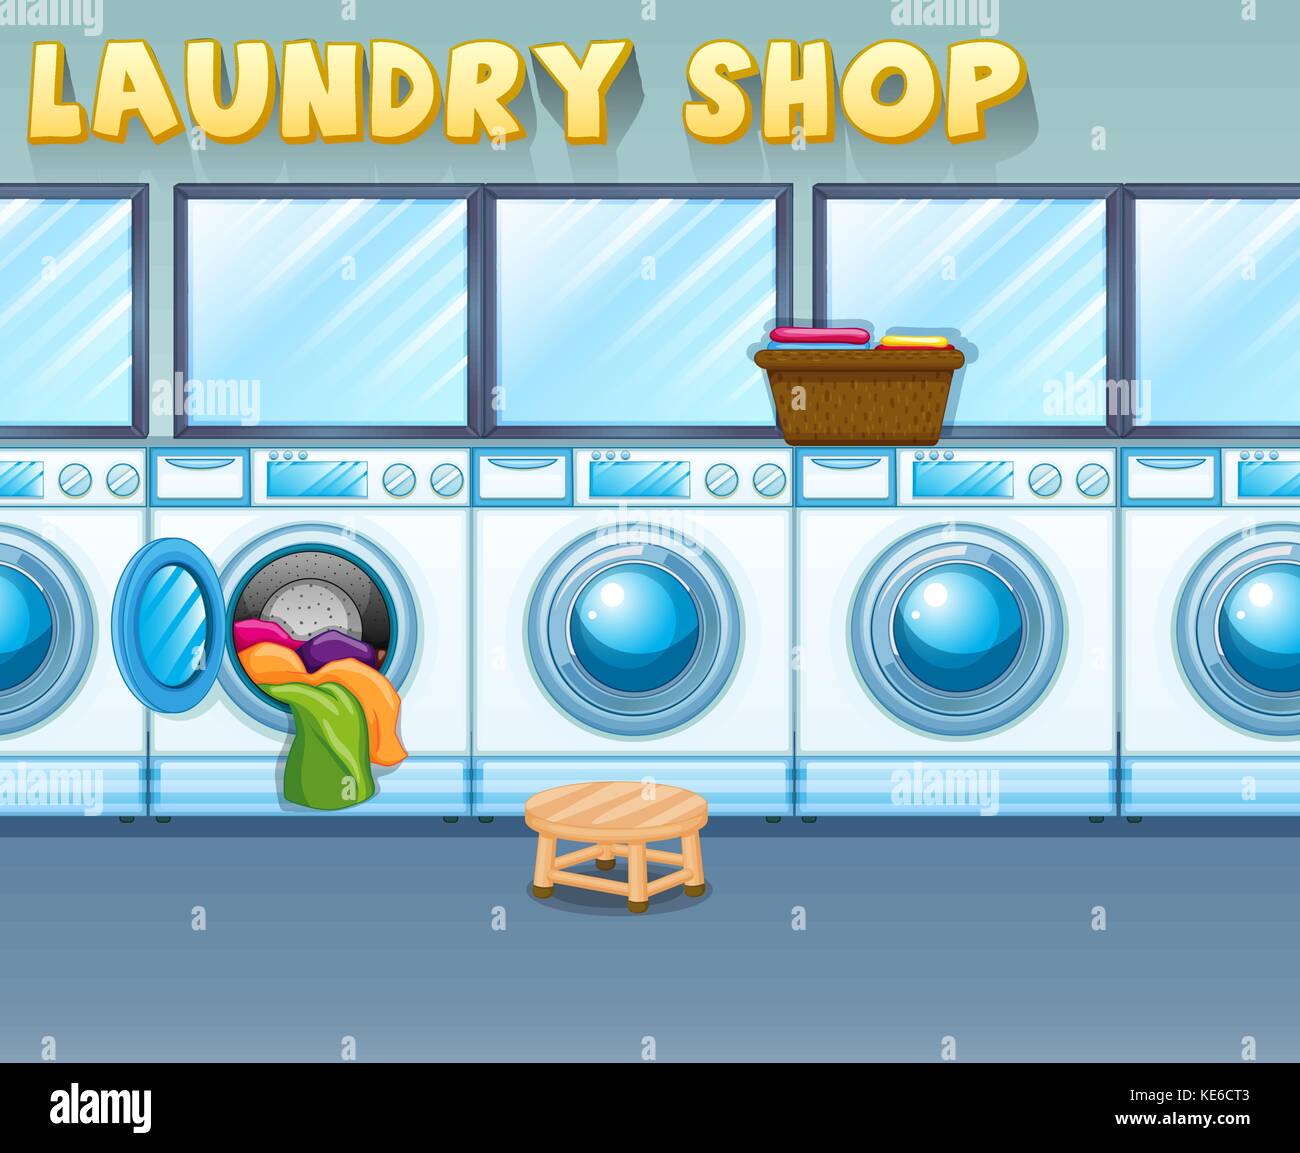 Scene in laundry shop illustration Stock Vector